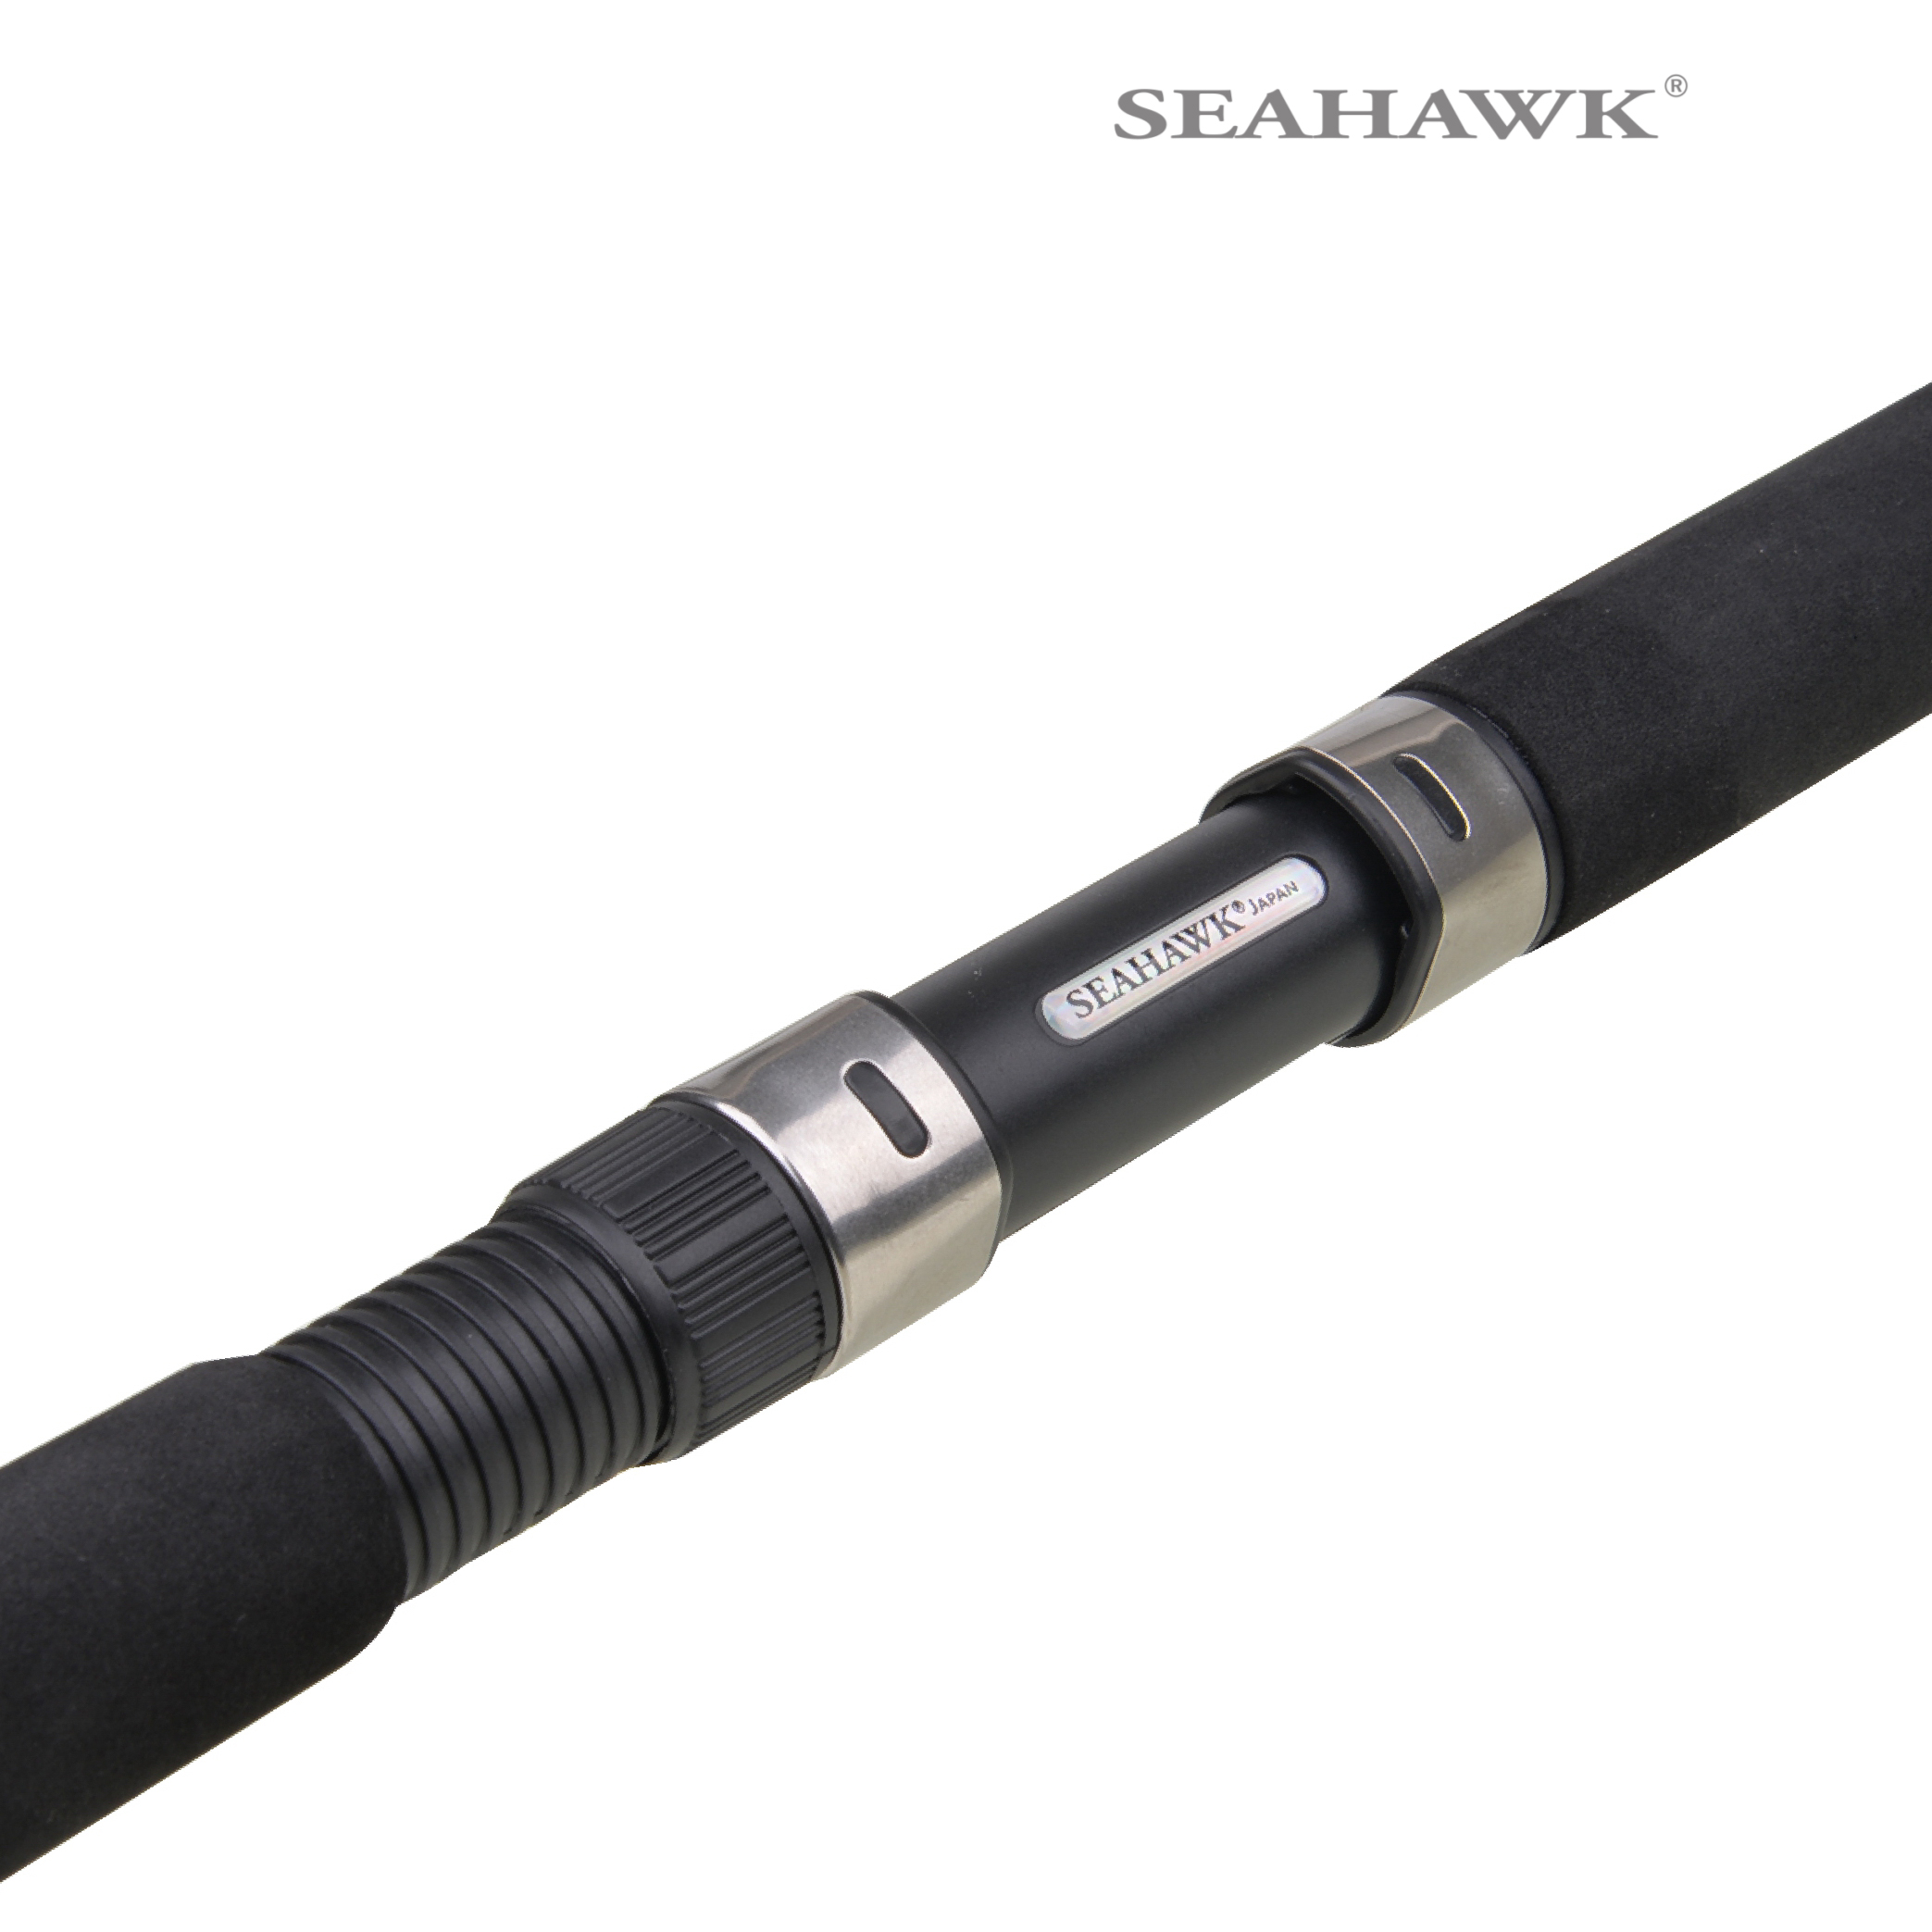 Seahawk Power Seven PS 01